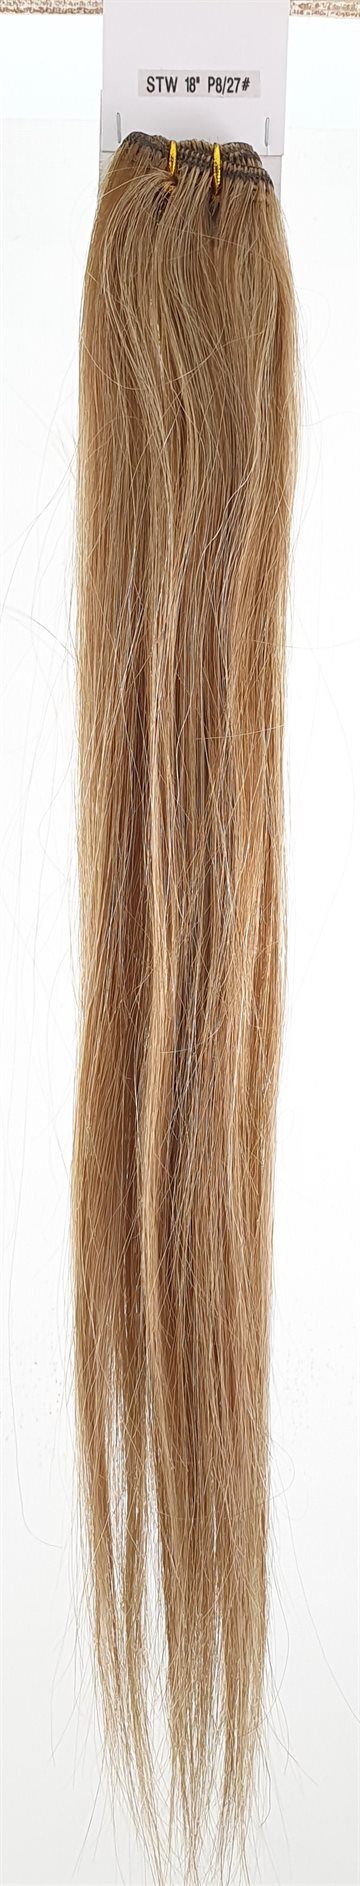 Human Hair - Straight Weft hair, color P8/27 mixed color 18" (45 cm. length.)